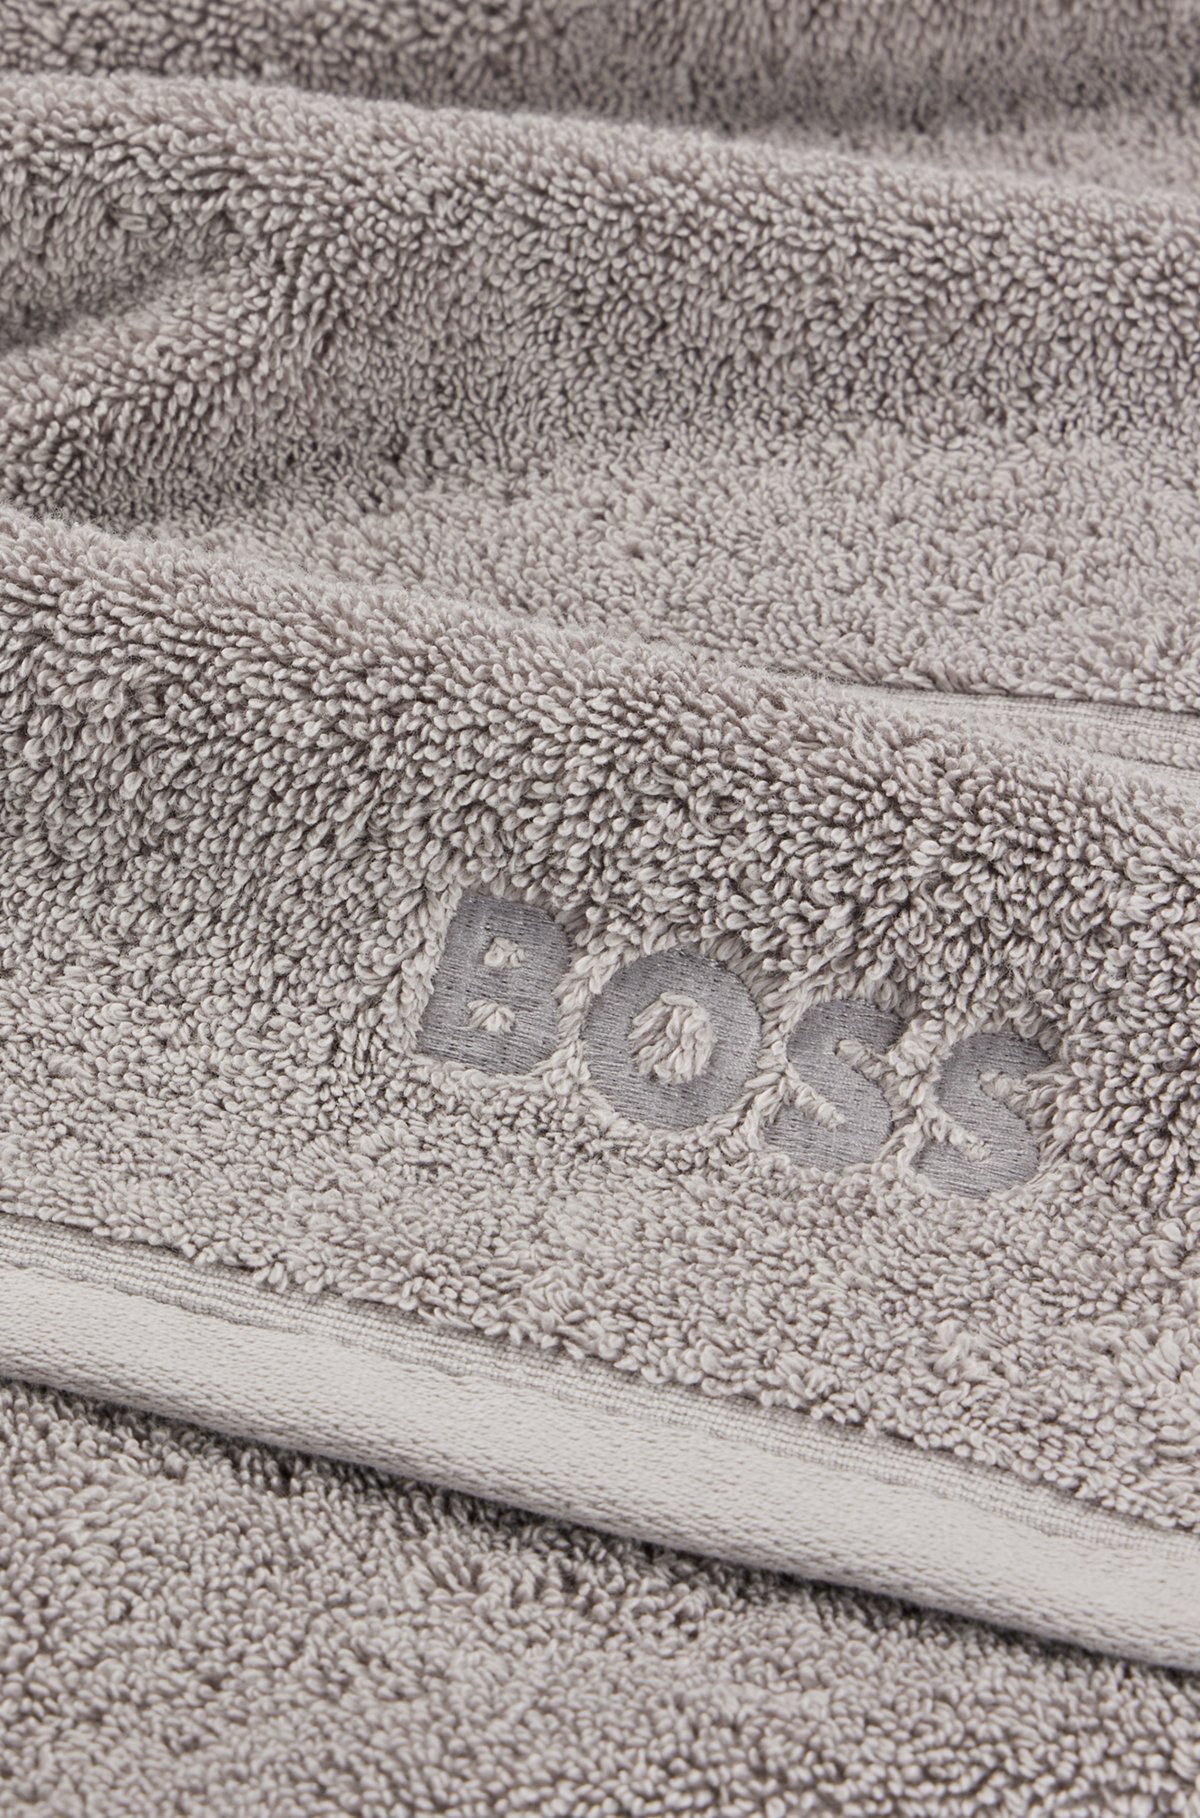 Silver Aegean-cotton bath towel with tonal logo, Silver